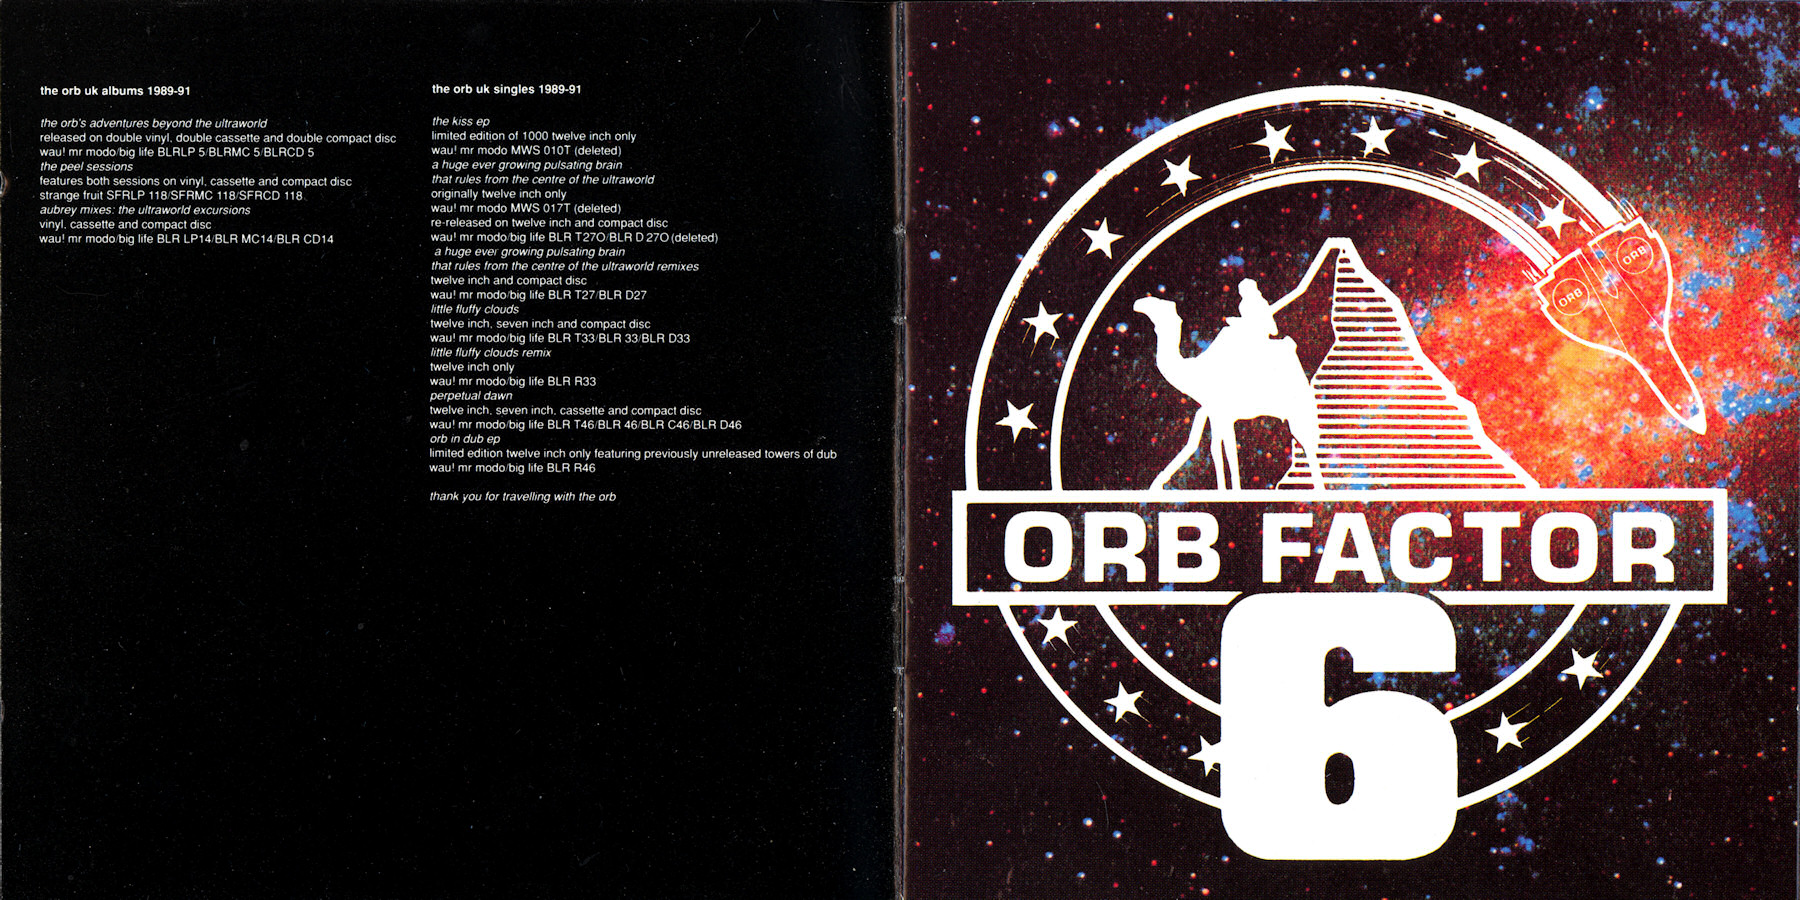 Лайф песня года. The Orb 1991. The Orb's Adventures Beyond the Ultraworld the Orb. The Orb - little fluffy clouds.